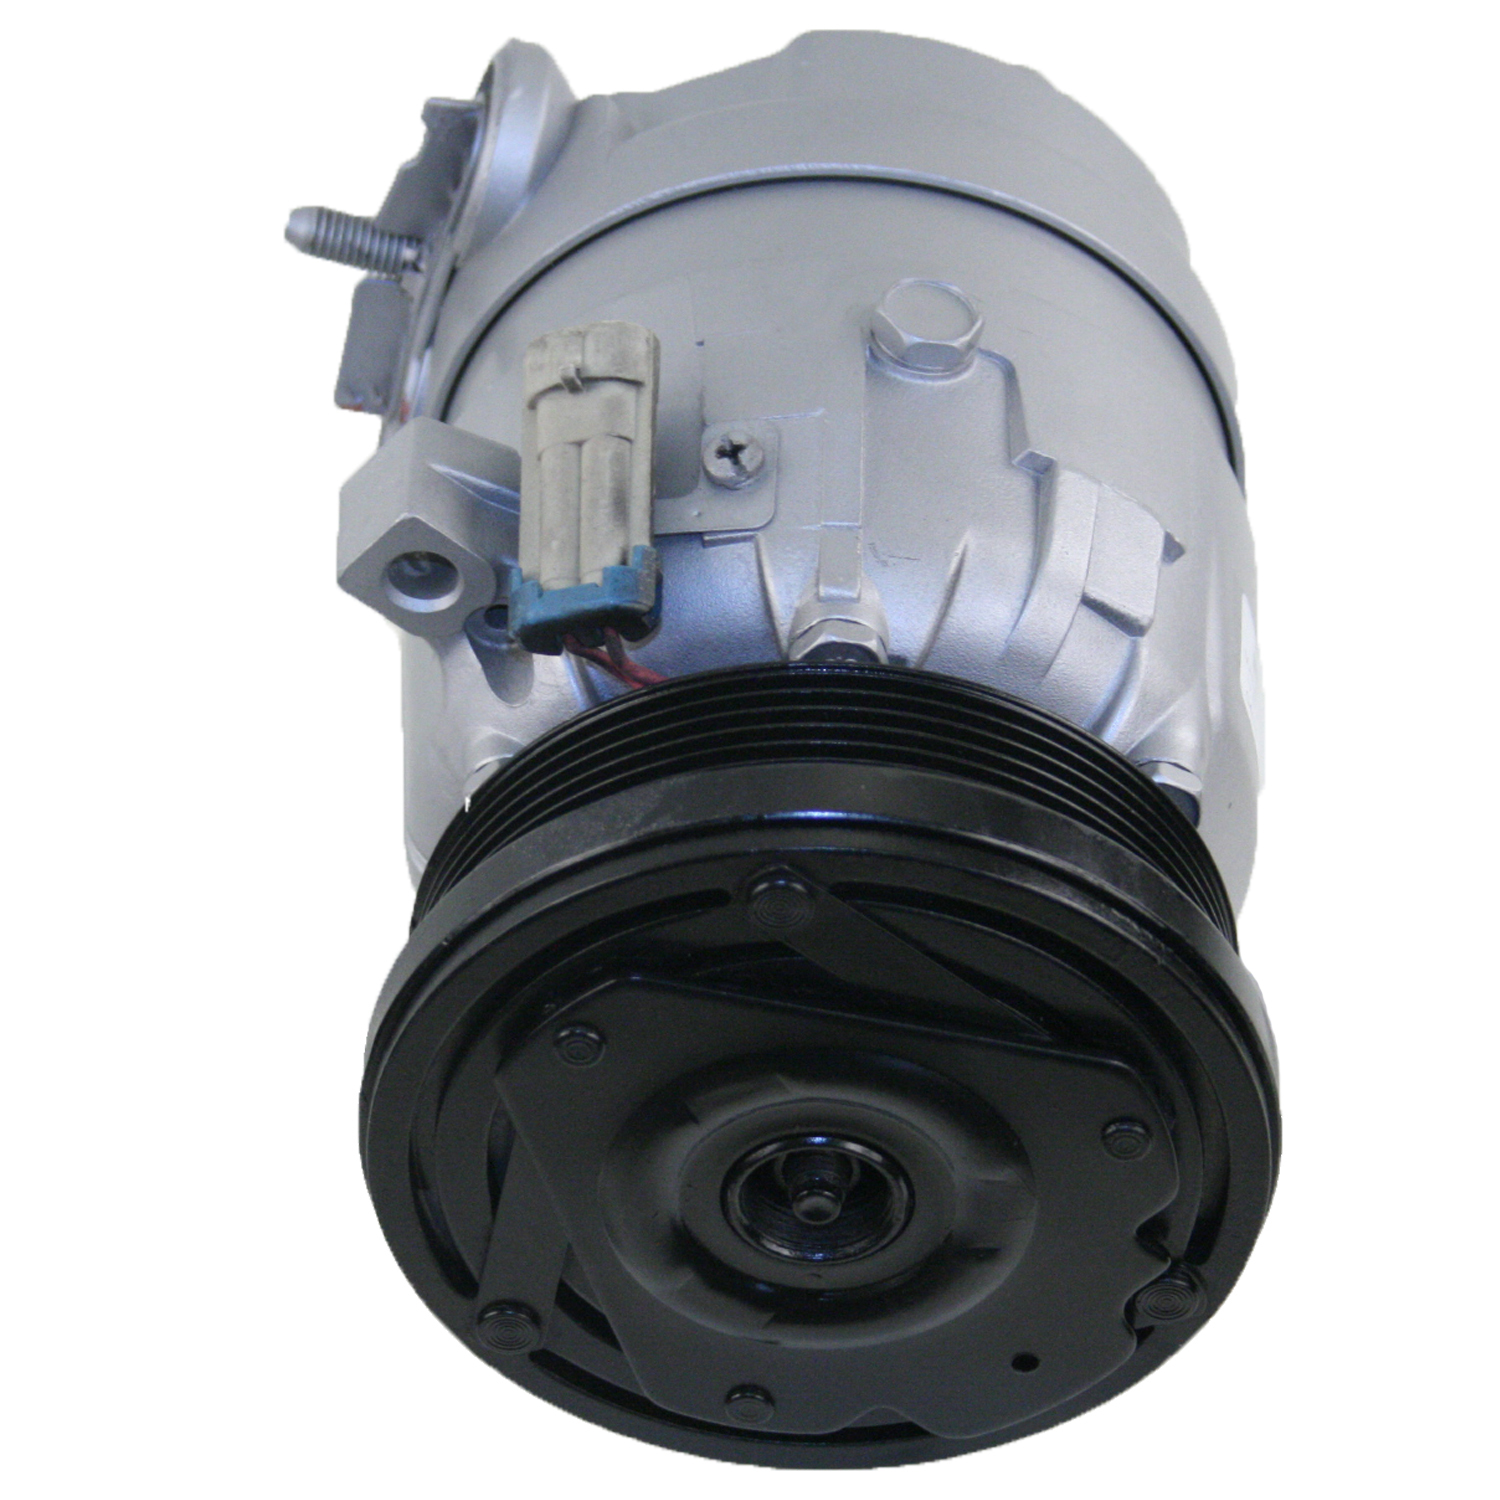 TCW Compressor 15-4003R Remanufactured Product Image field_60b6a13a6e67c